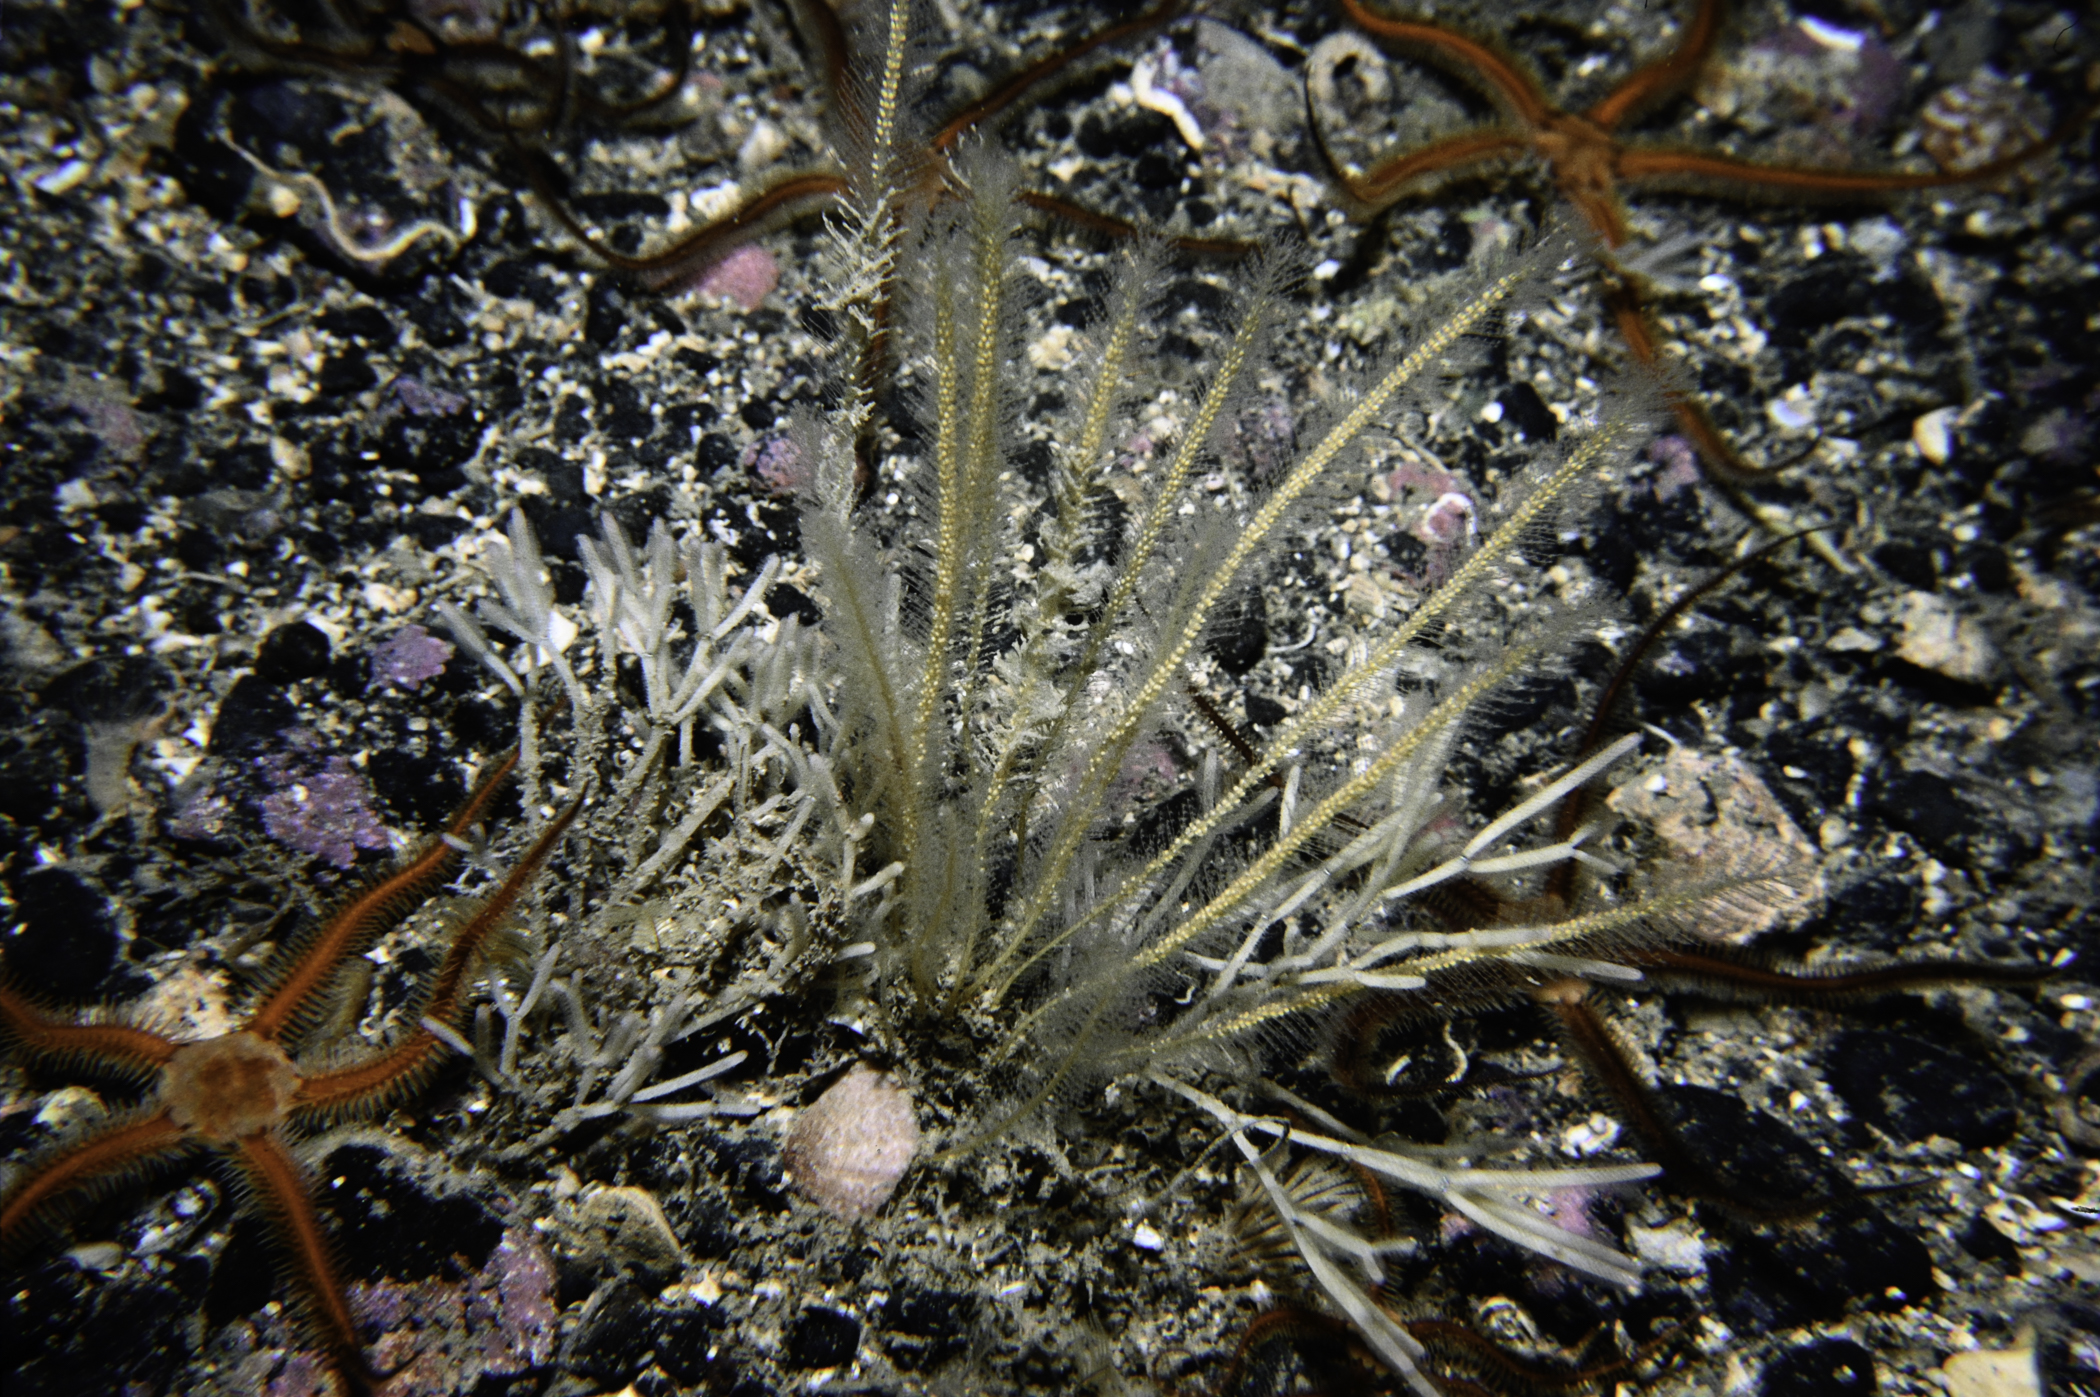 Nemertesia antennina, Cellaria fistulosa, Ophiocomina nigra. Site: E Coast, Rathlin Island. 